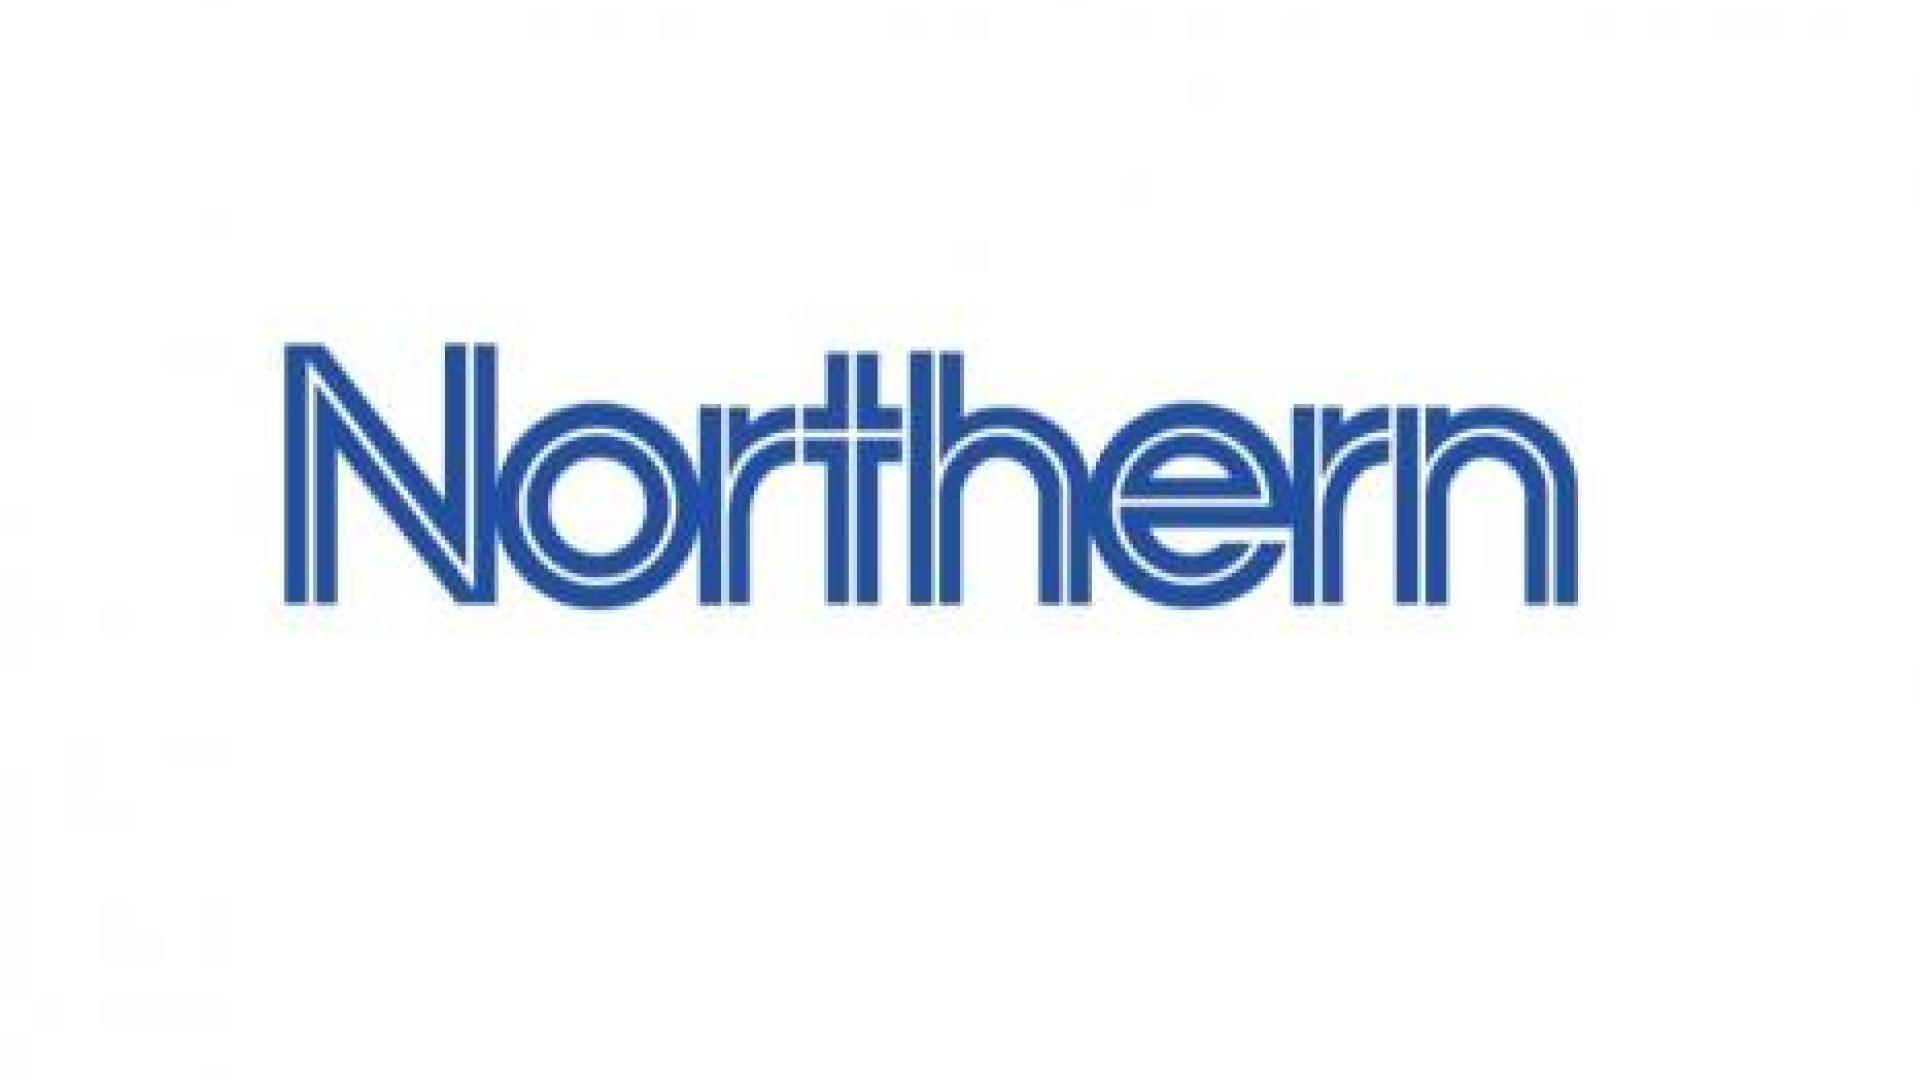 Northern Store logo.